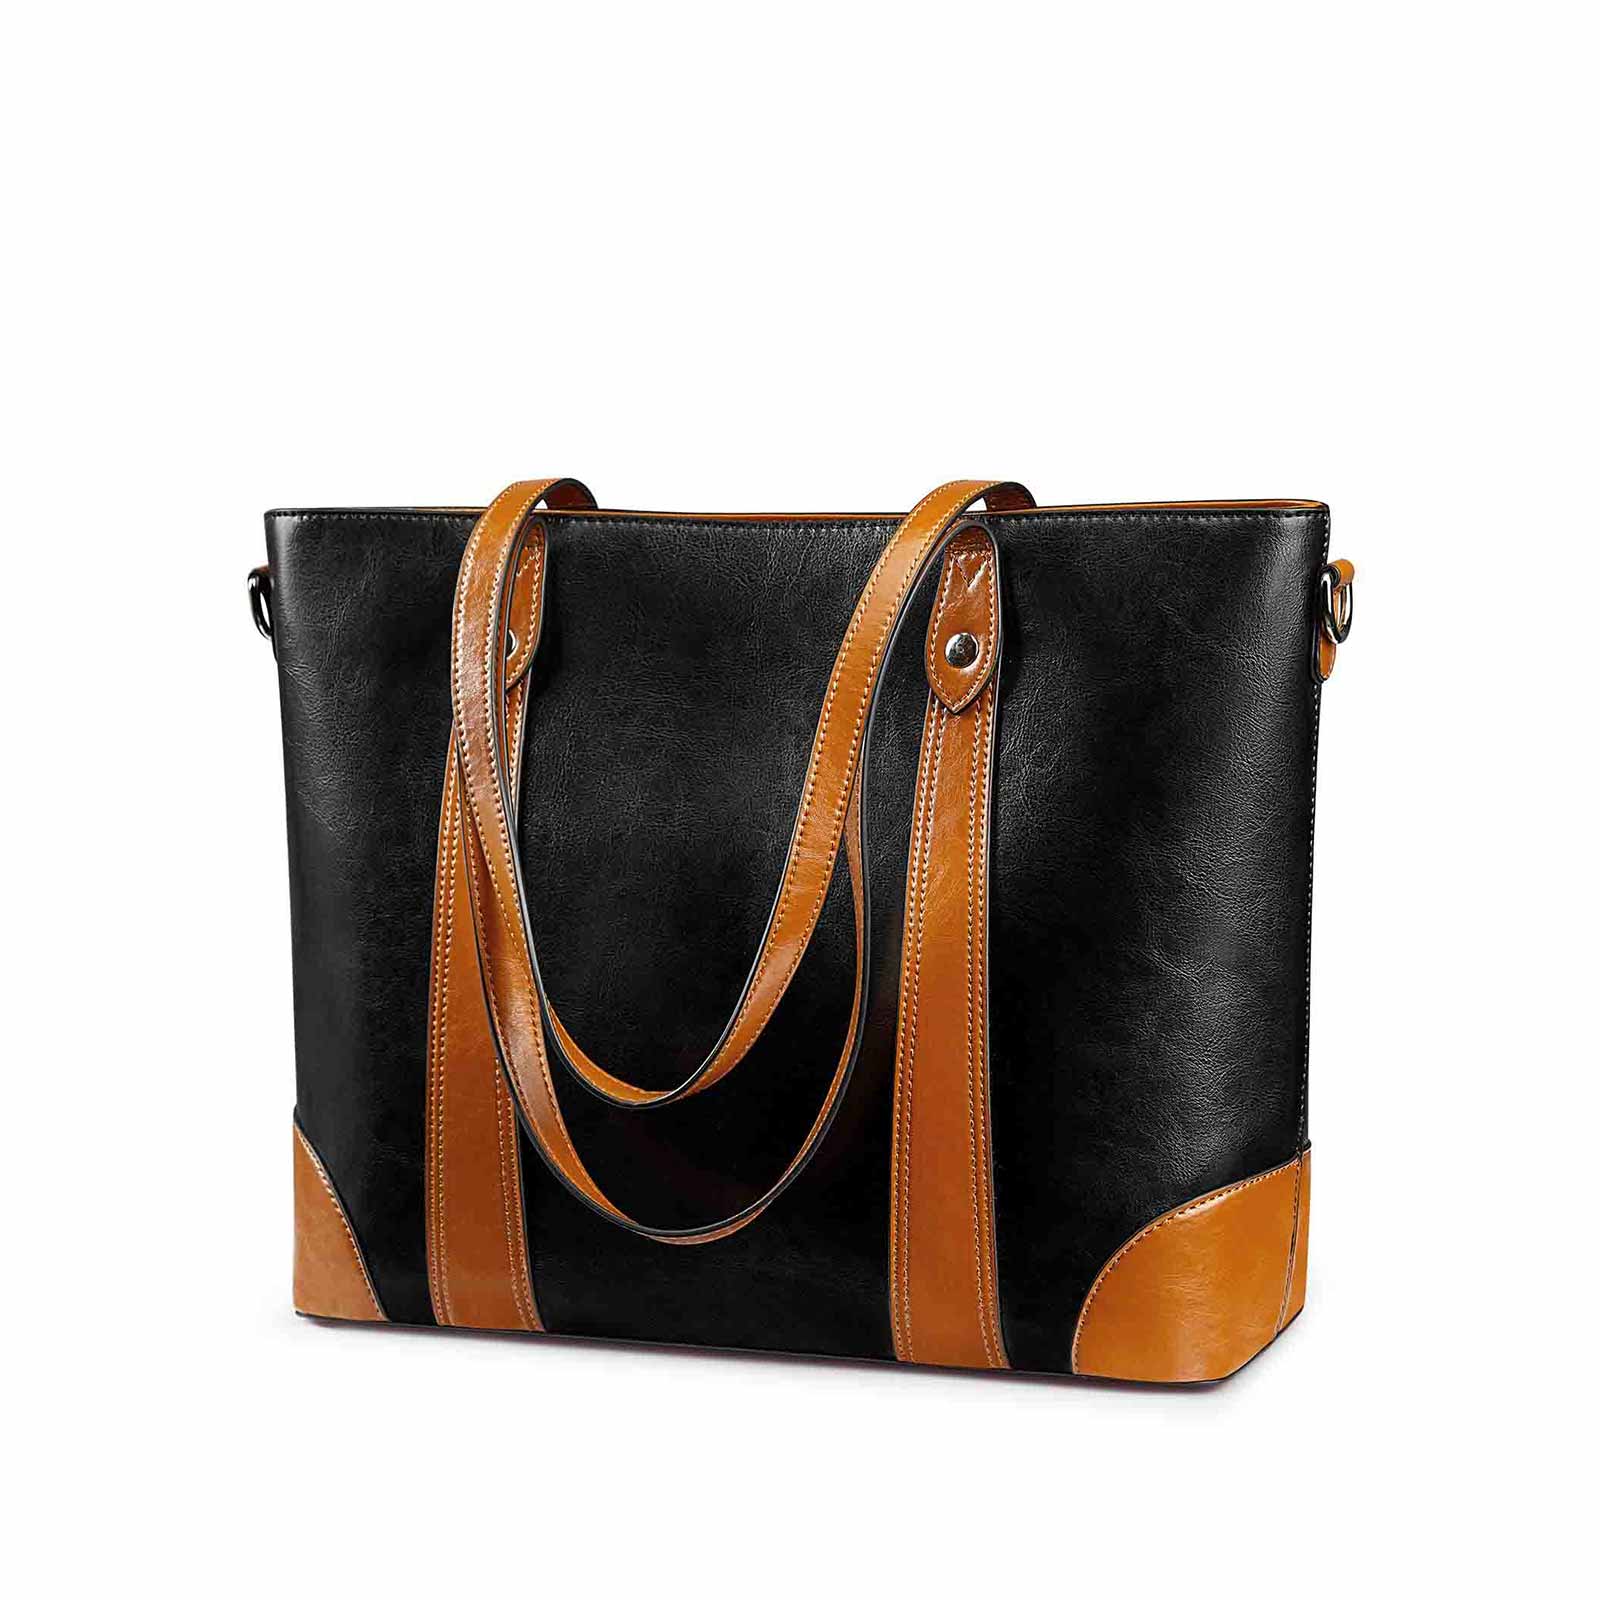 Leather Laptop Tote Handbag for Women